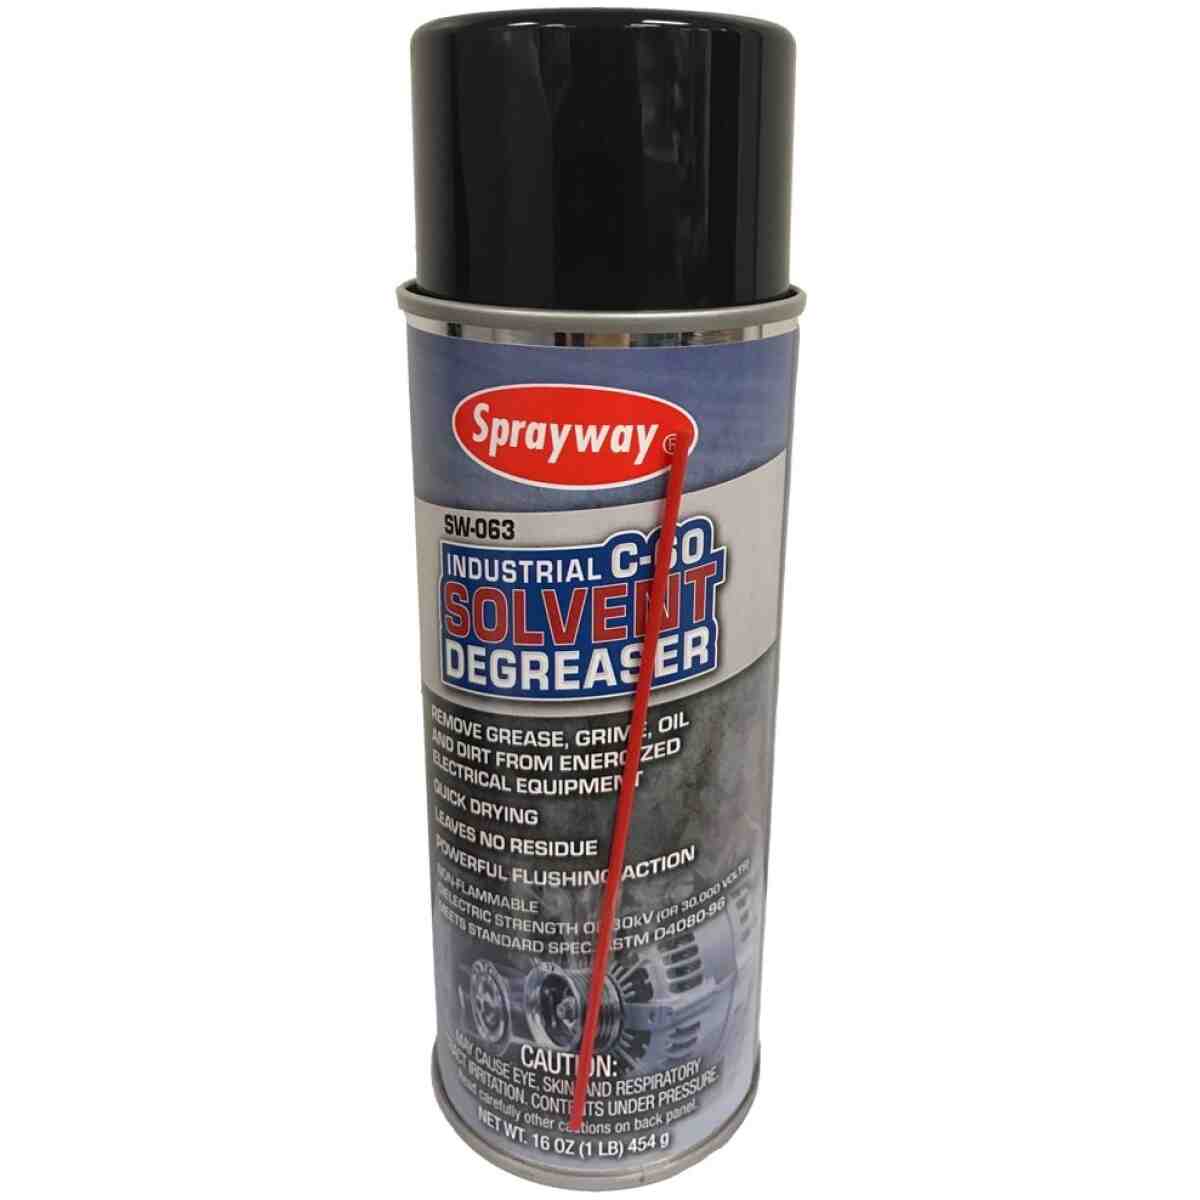 Sprayway C-60 Solvent Cleaner & Degreaser - 20 Oz. - 1 Can SPRAYWAY®